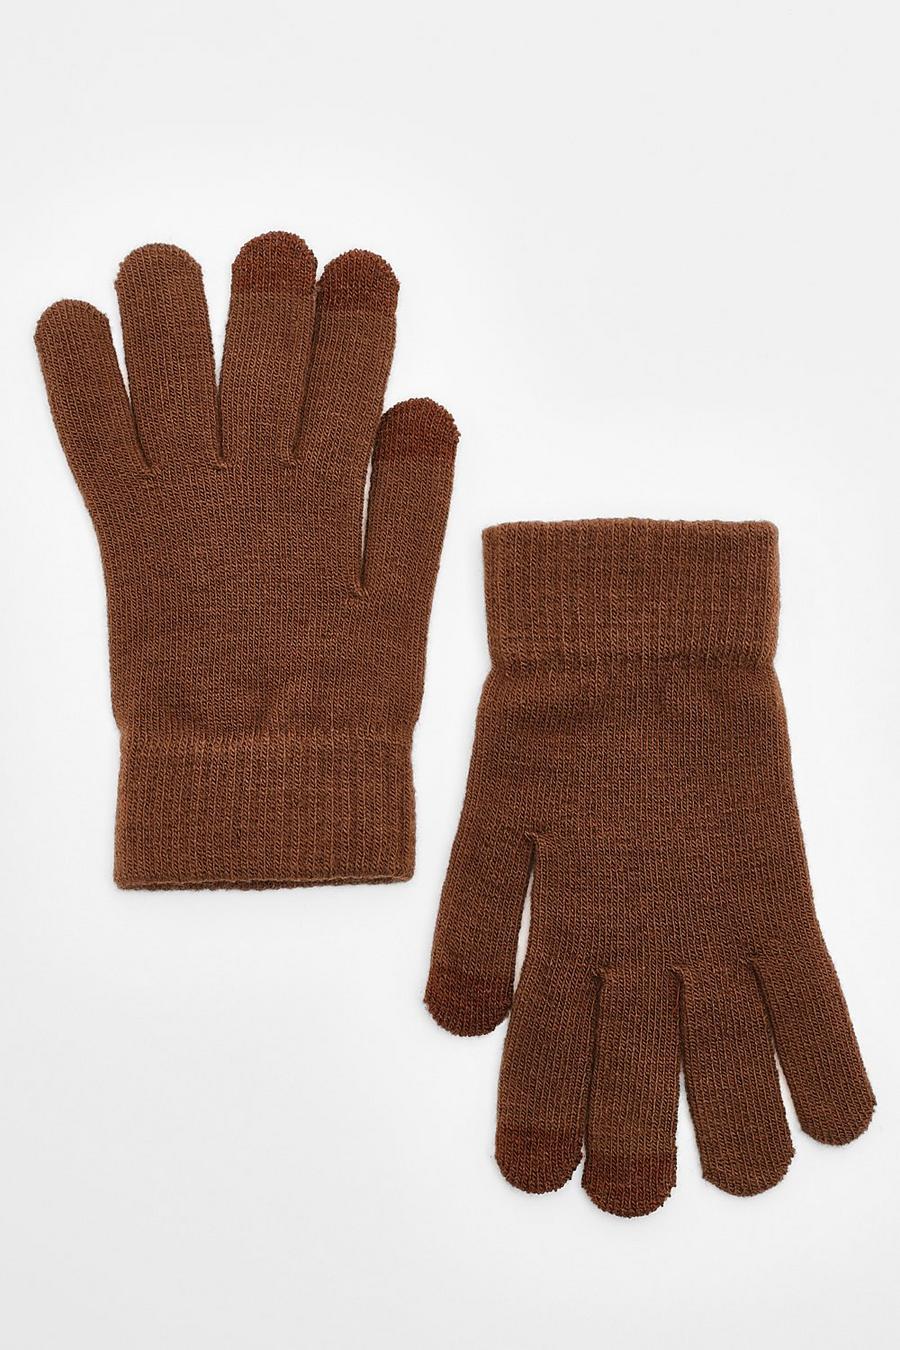 Chocolate brown Basic Gloves 